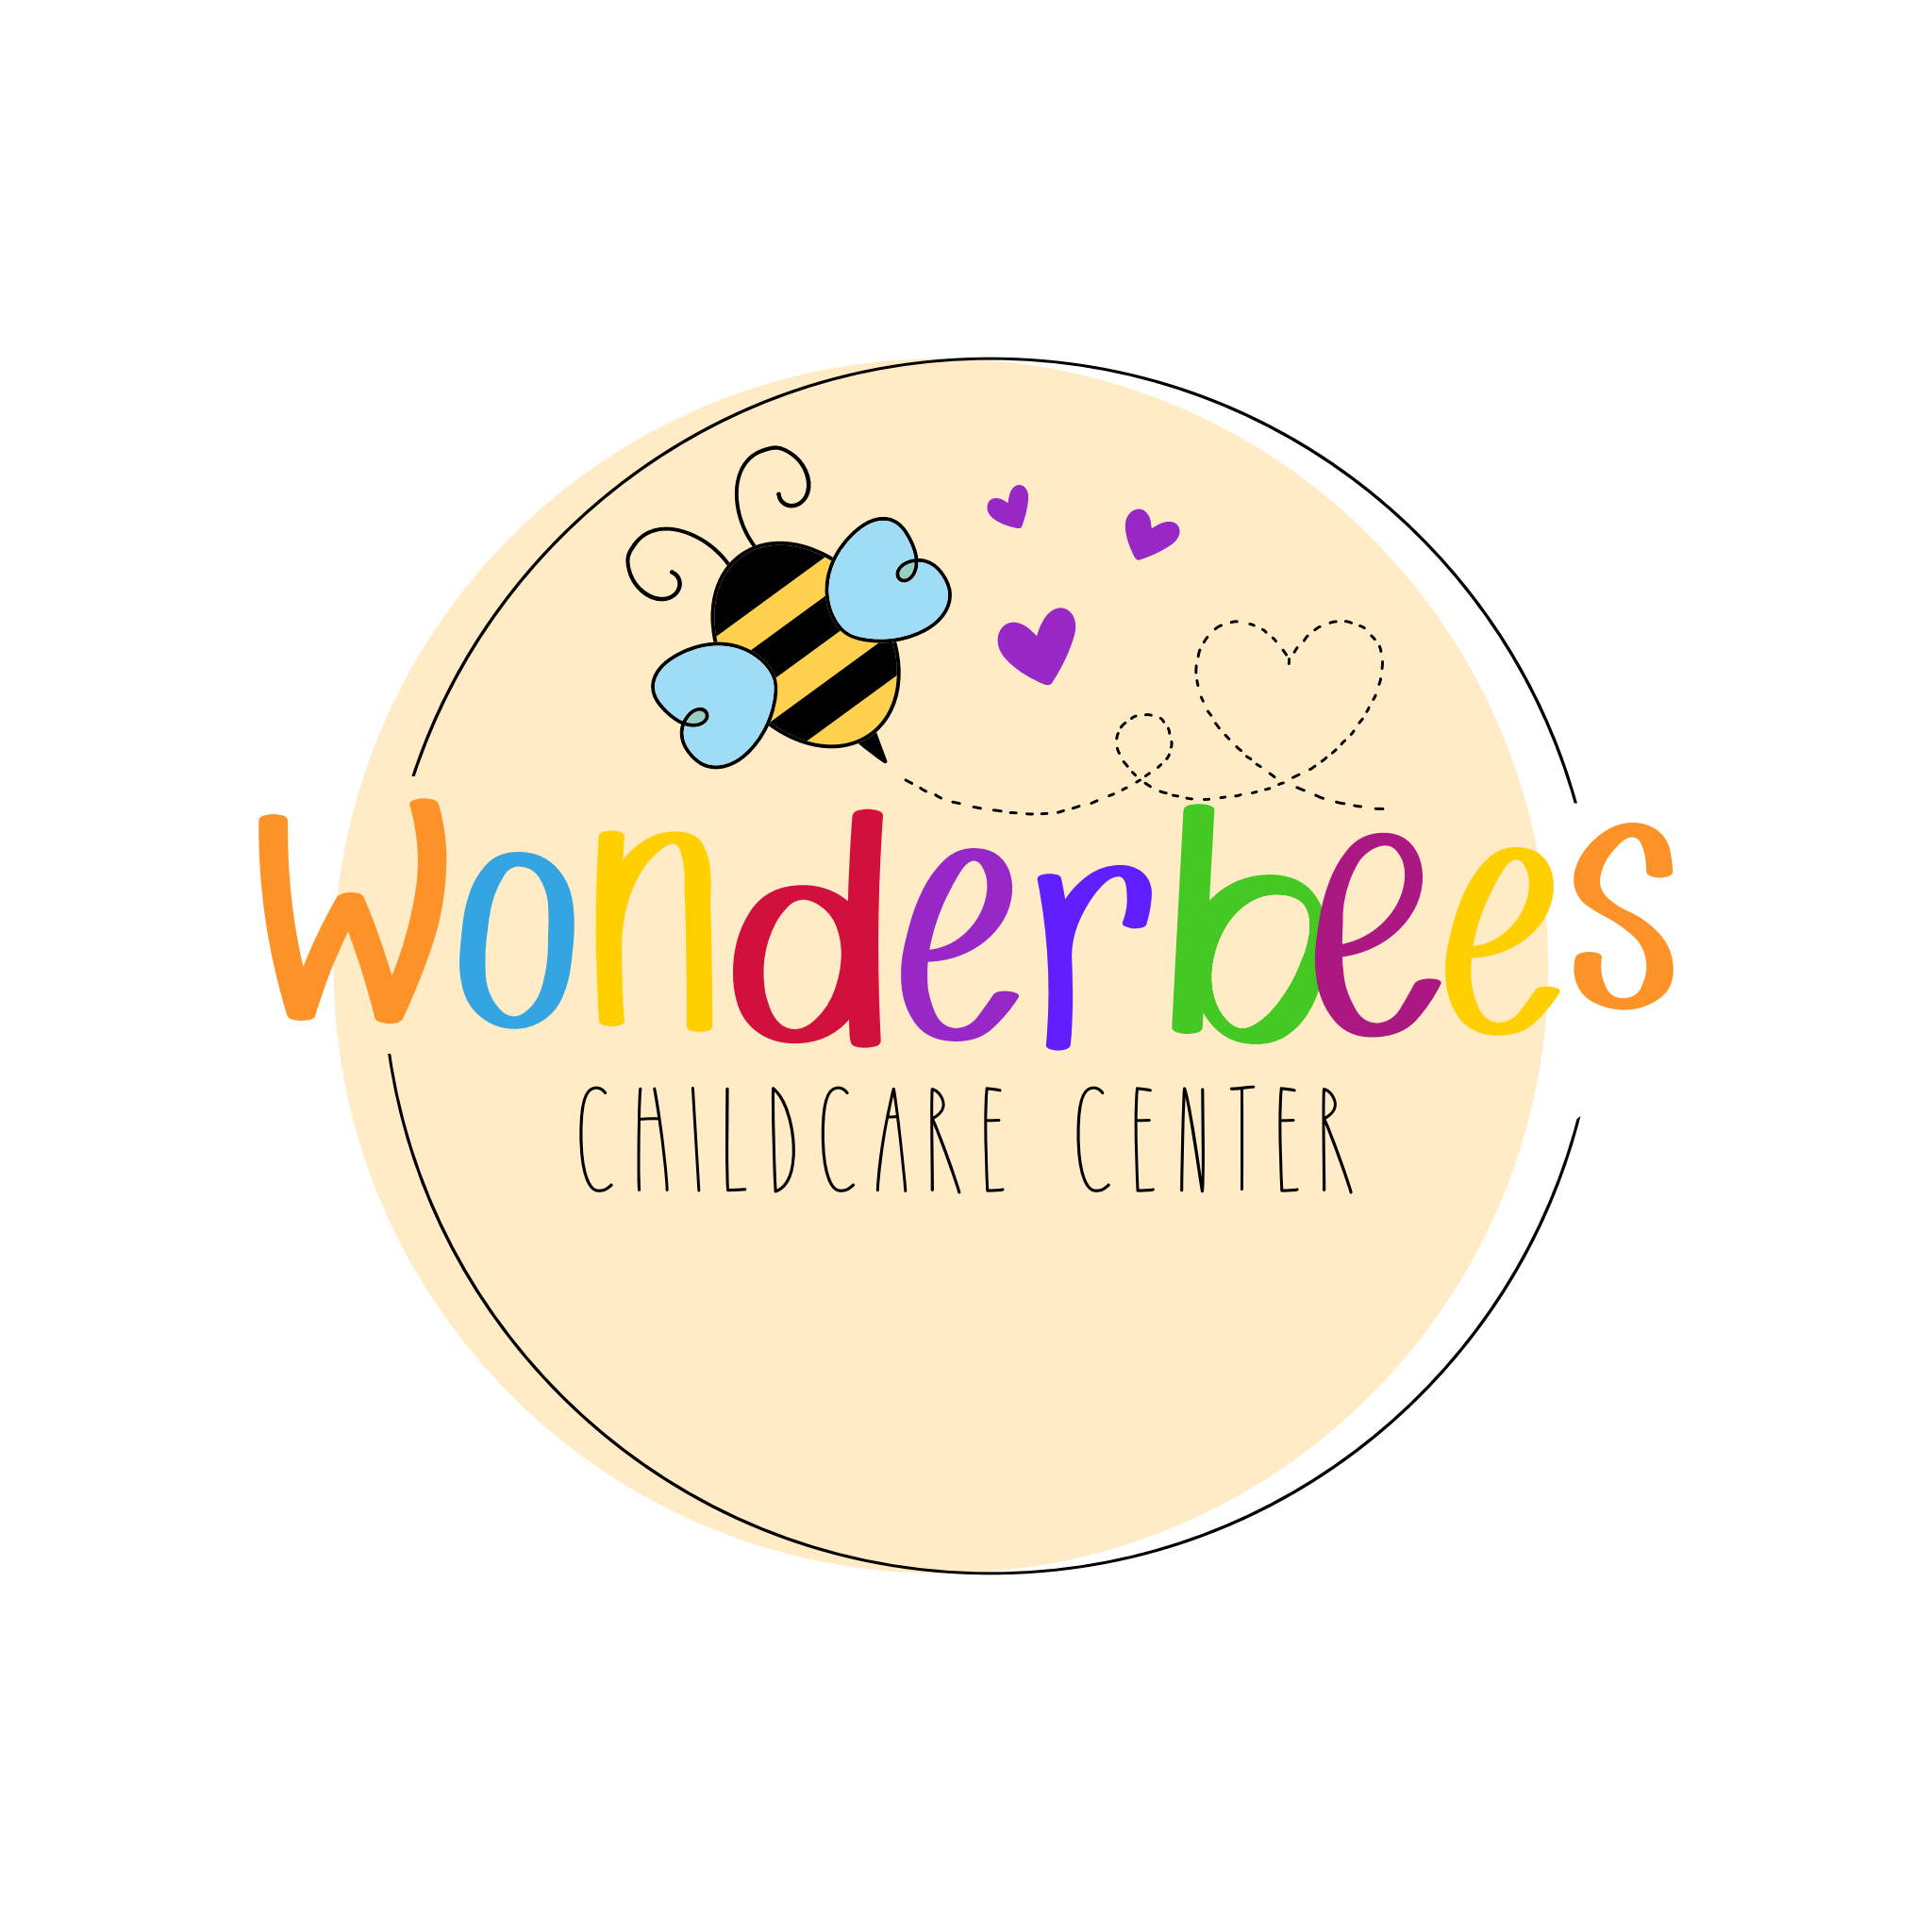 Wonderbees Childcare Center